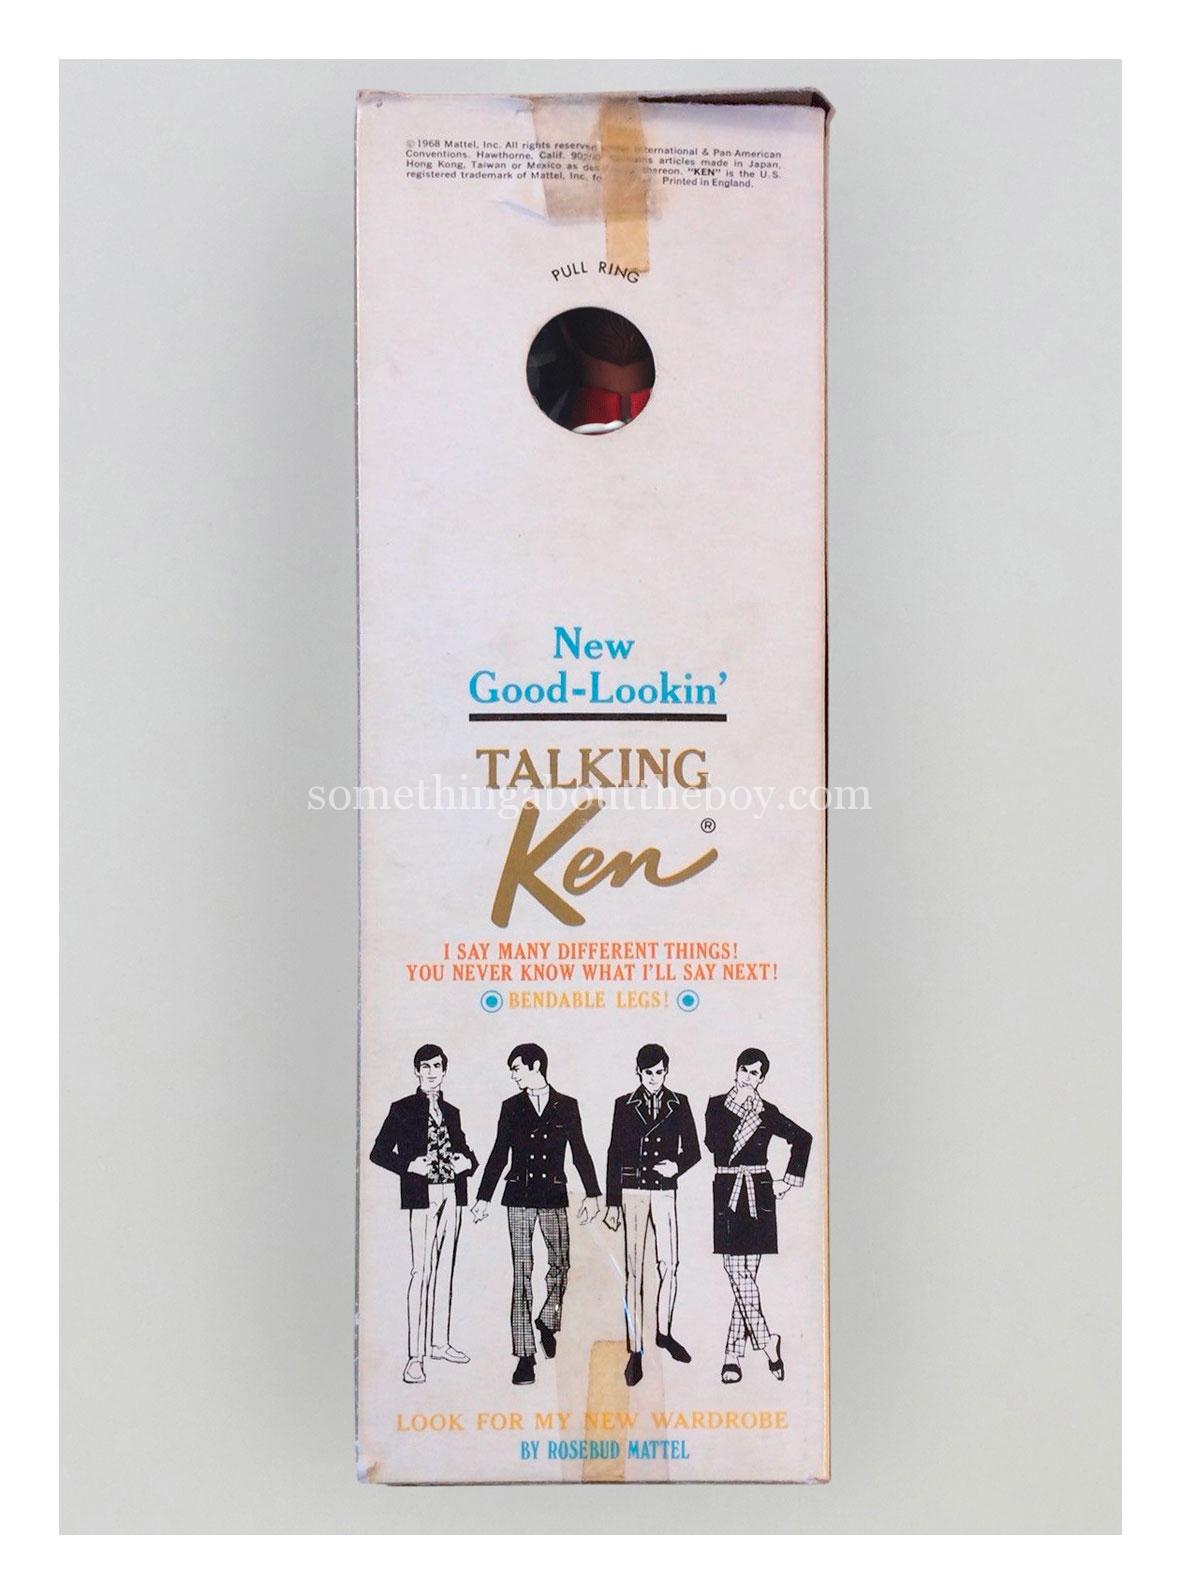 1969 #1111 New Good-Lookin' Talking Ken (British packaging)